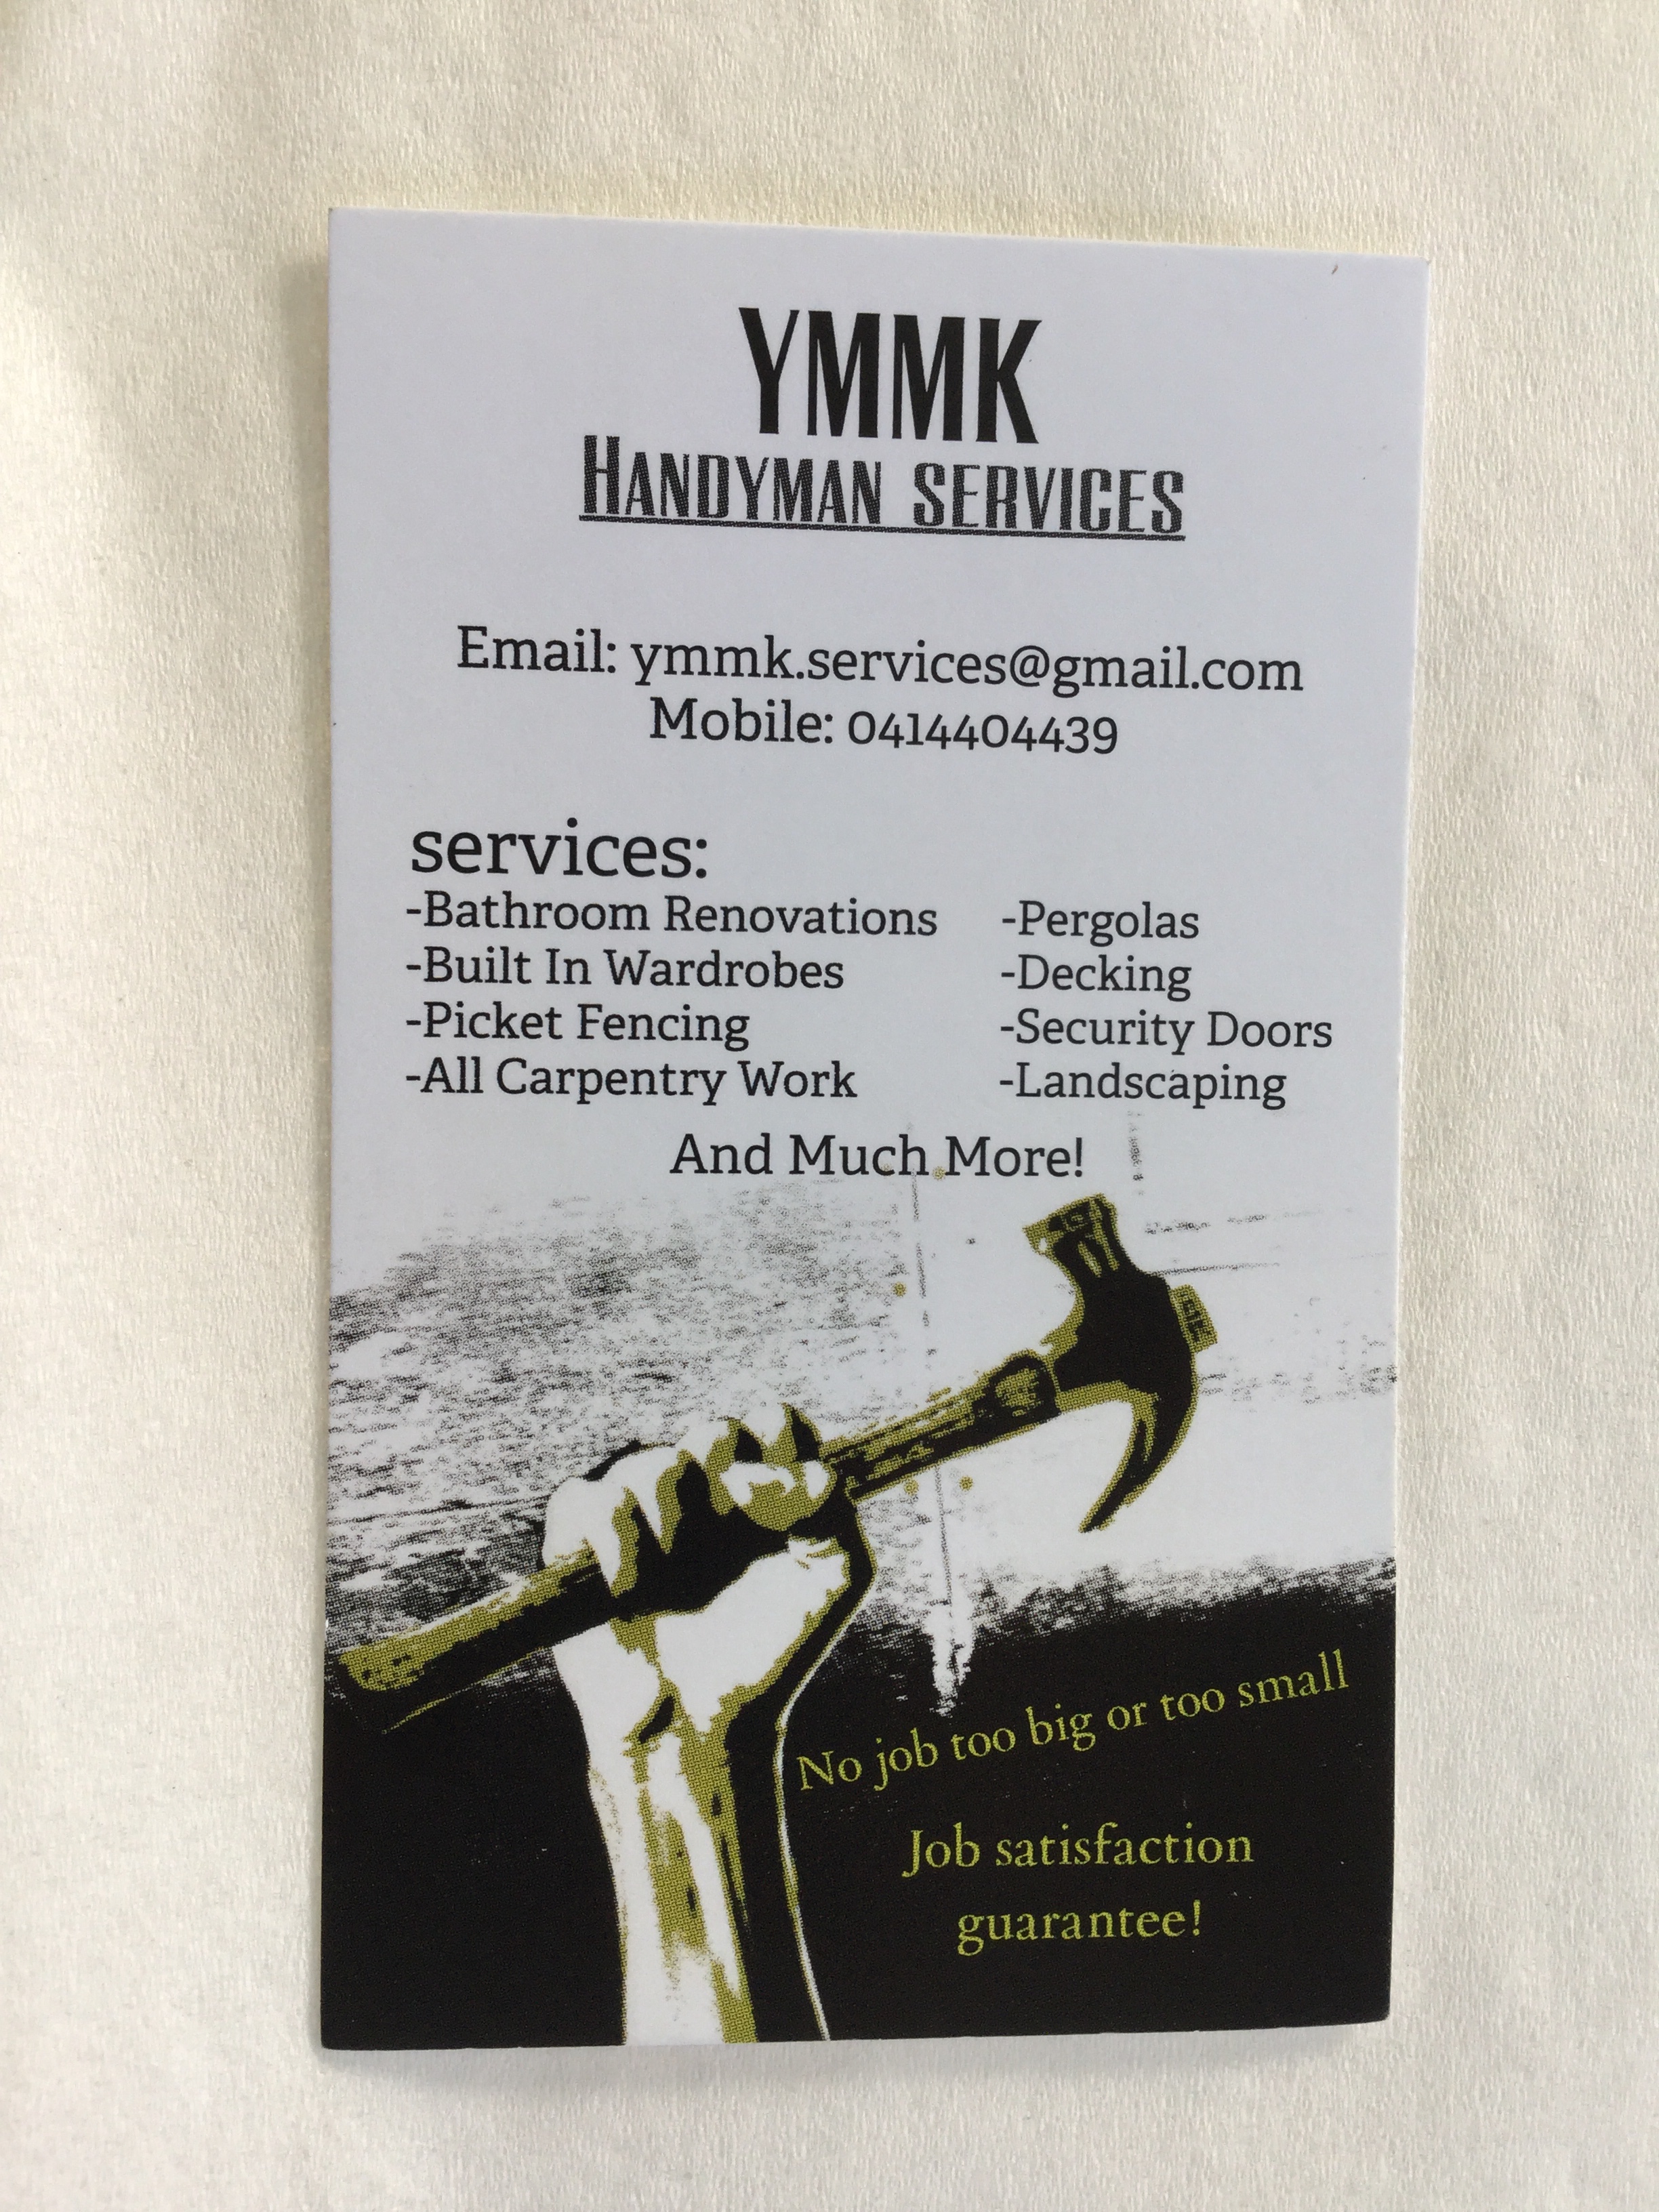 YMMK Handyman Services